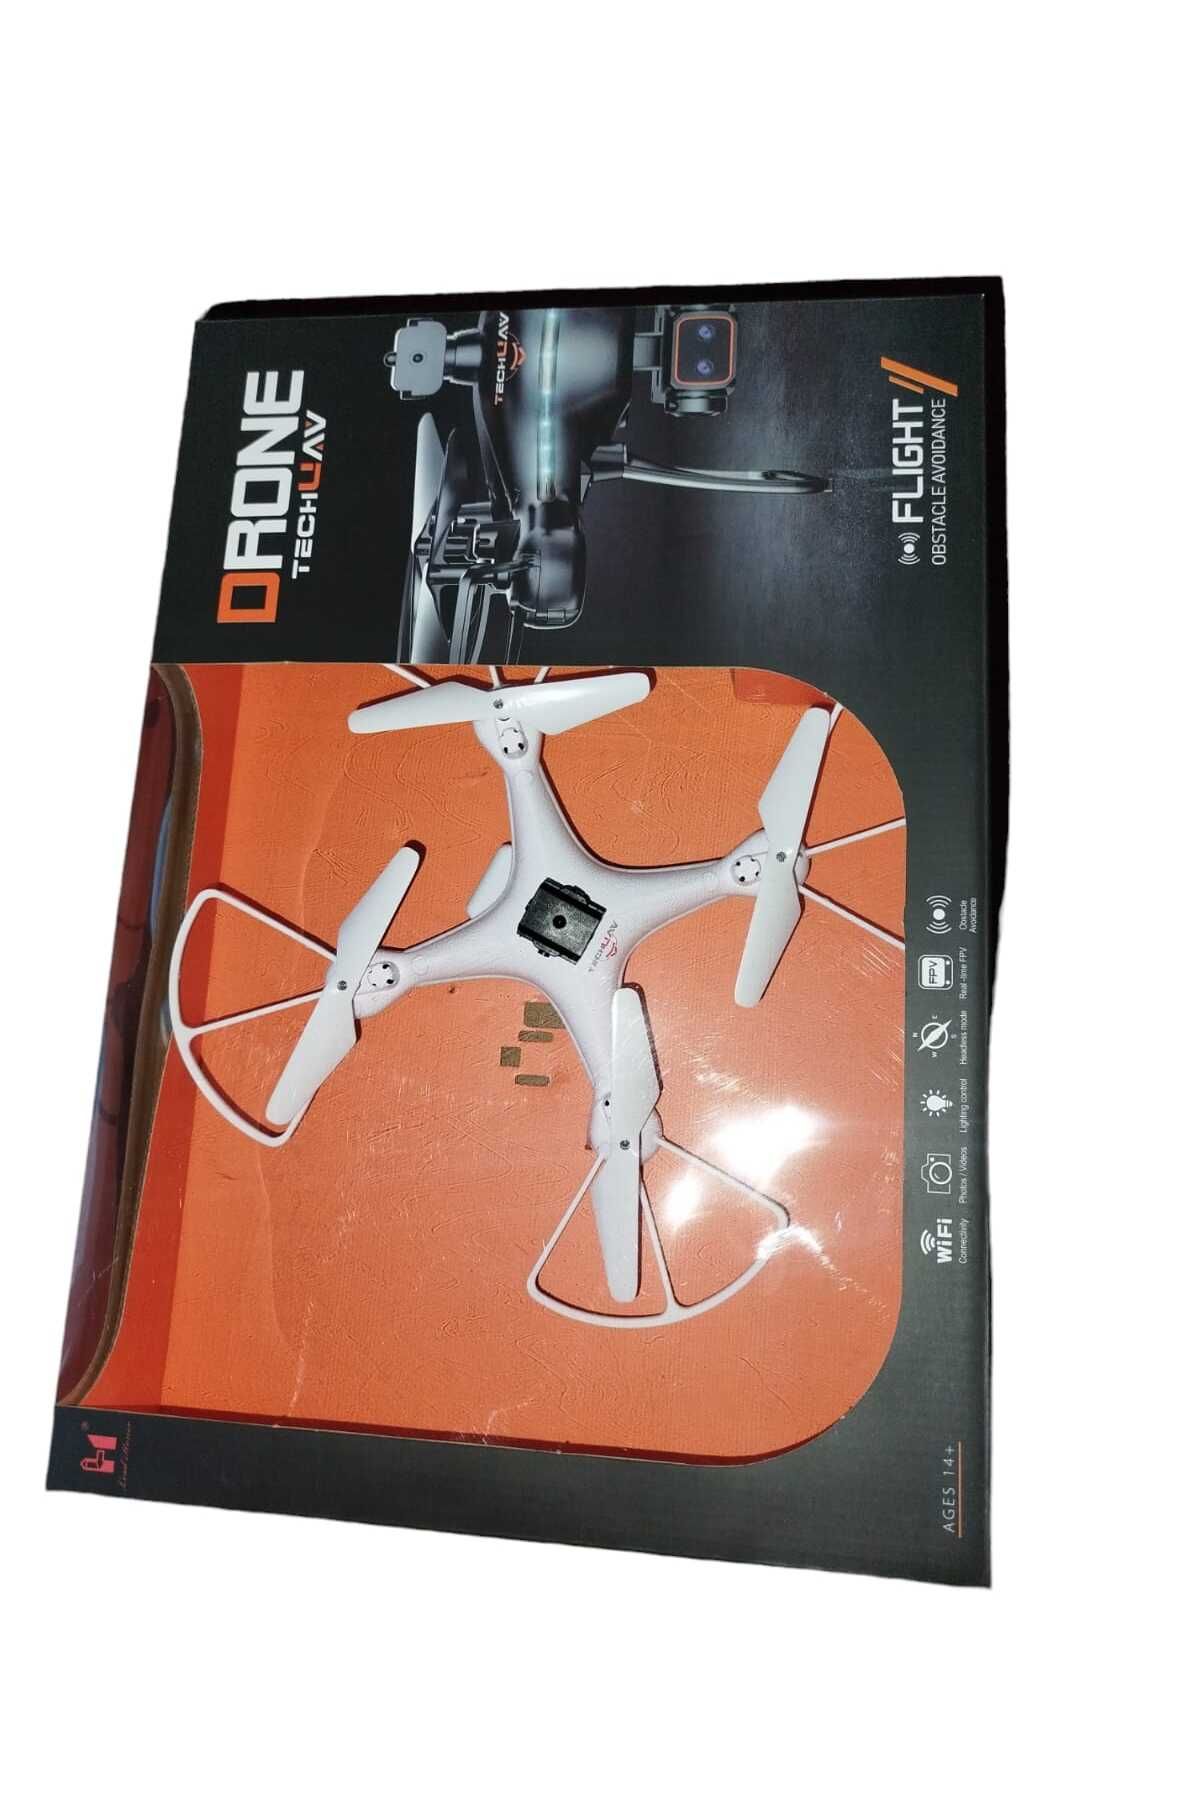 CAN Engelleri Aşan Drone